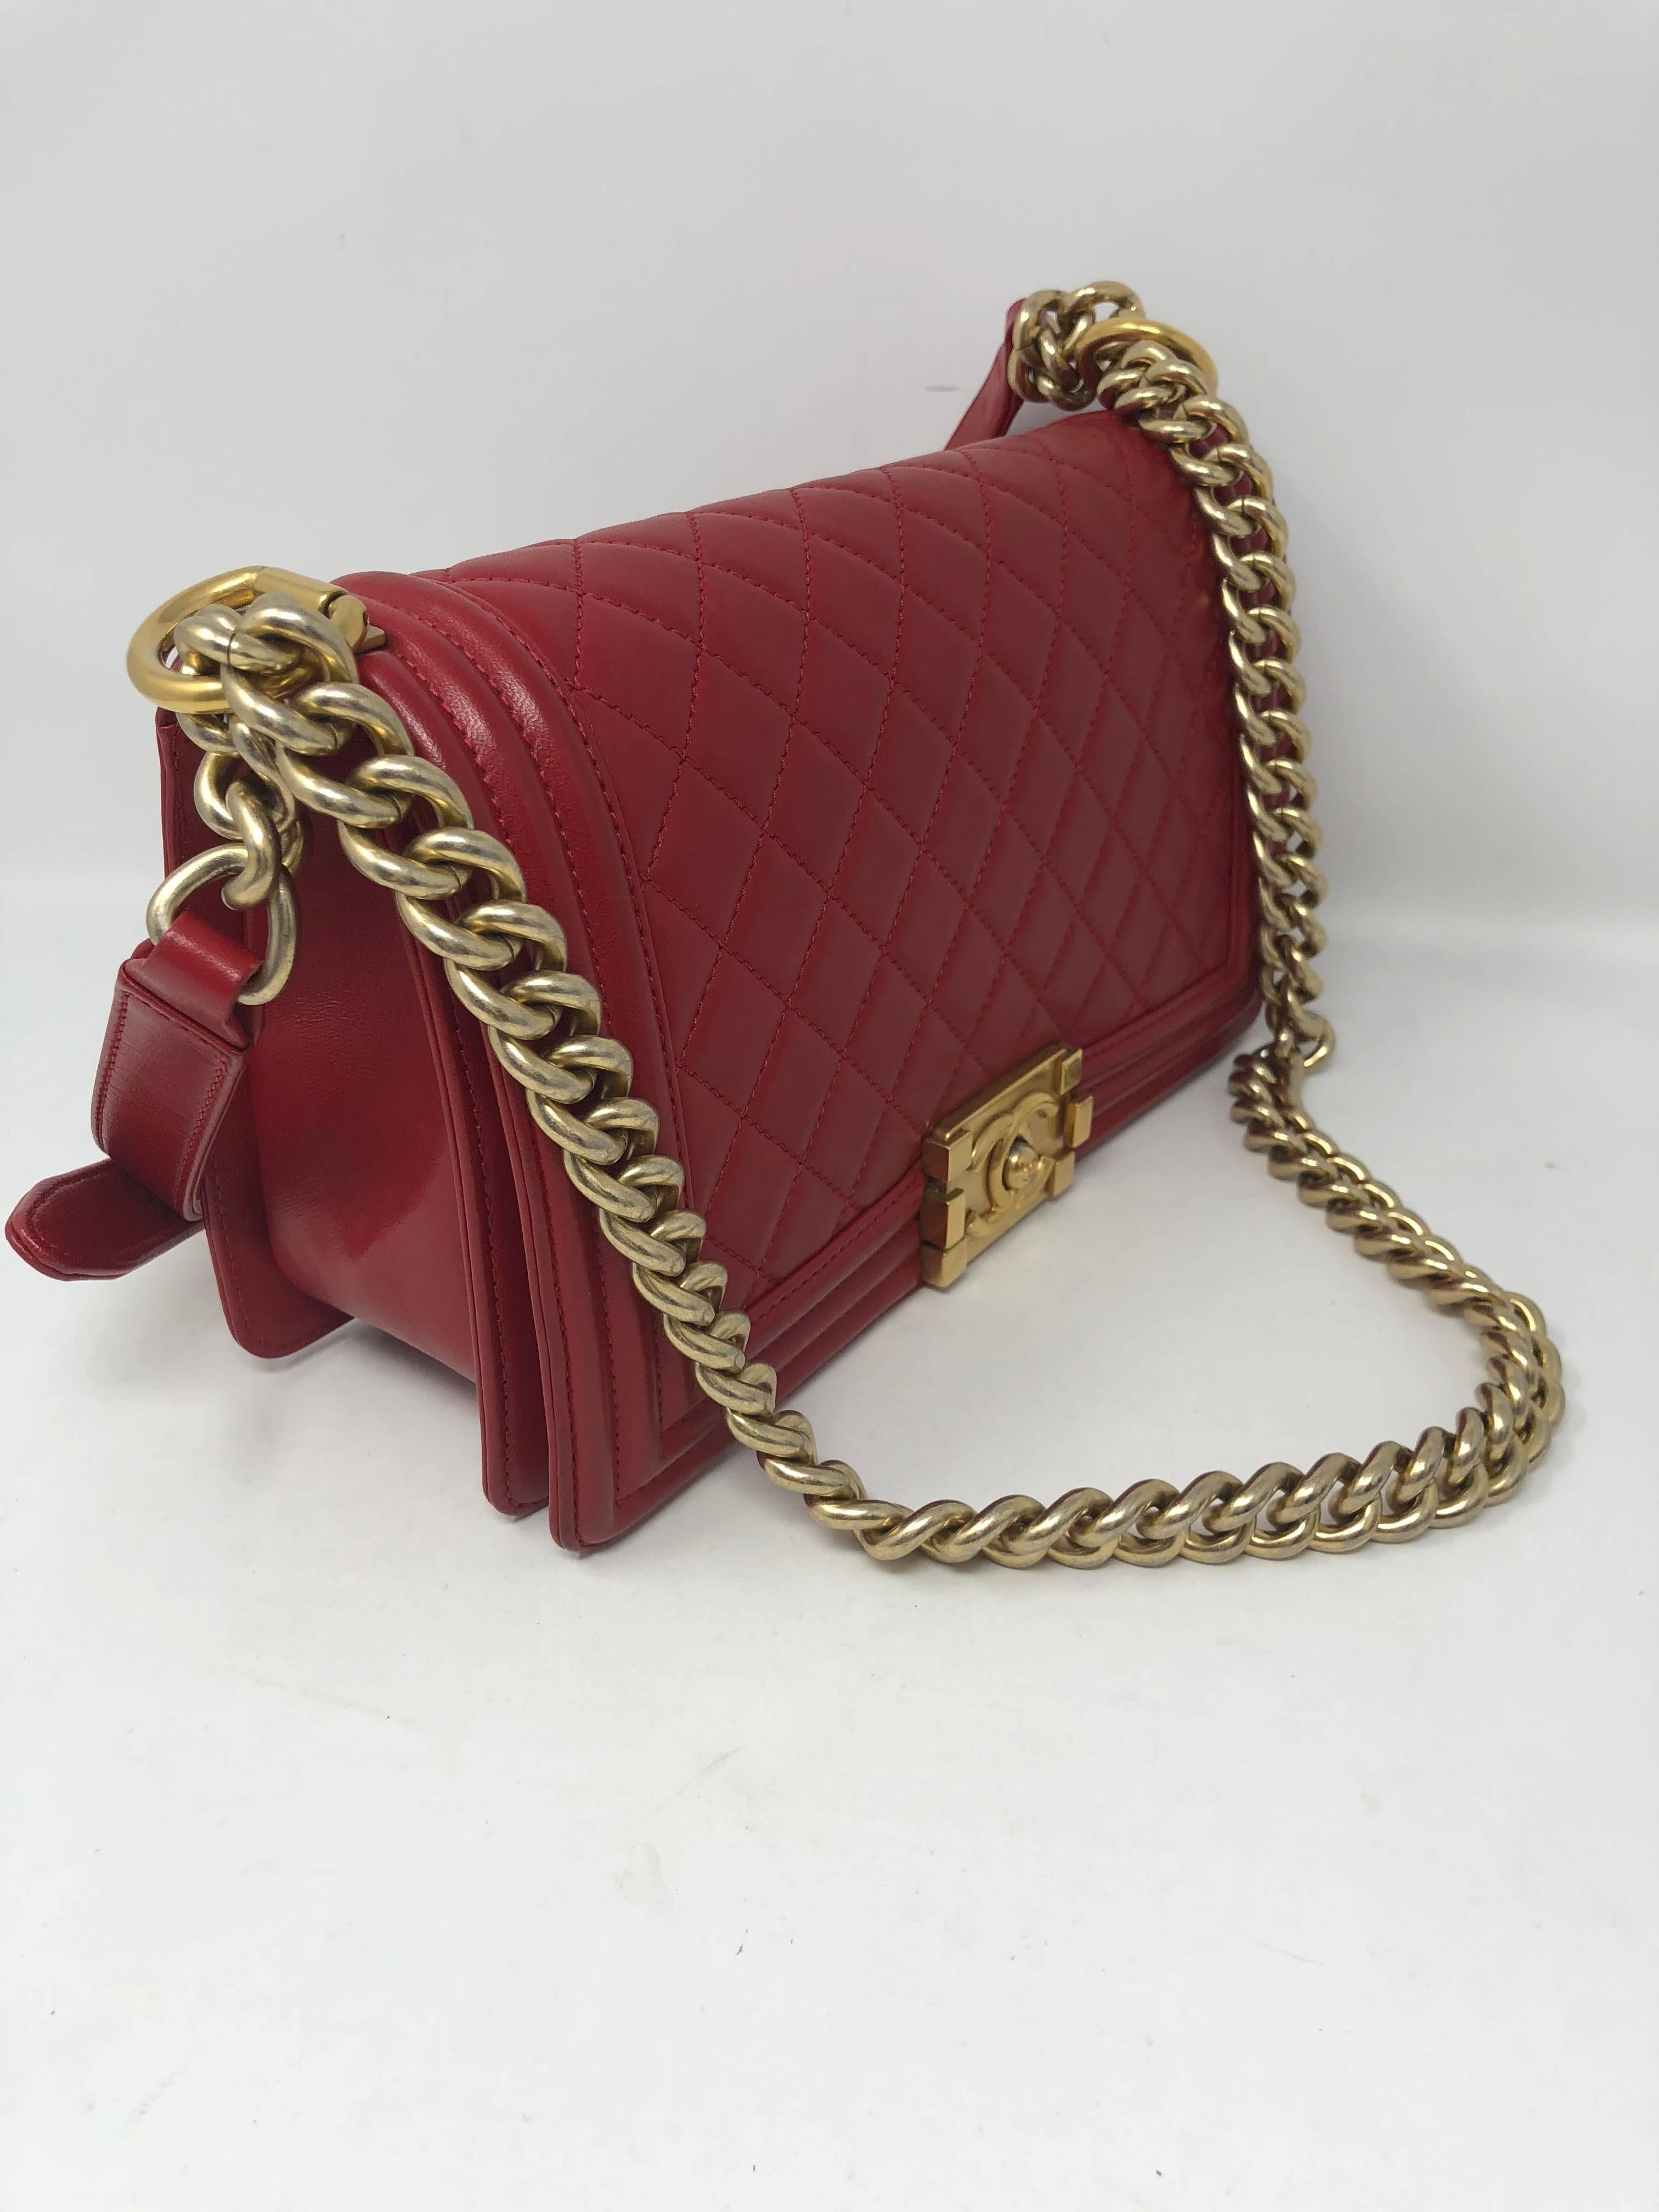 Chanel Le Boy Red Bag 4